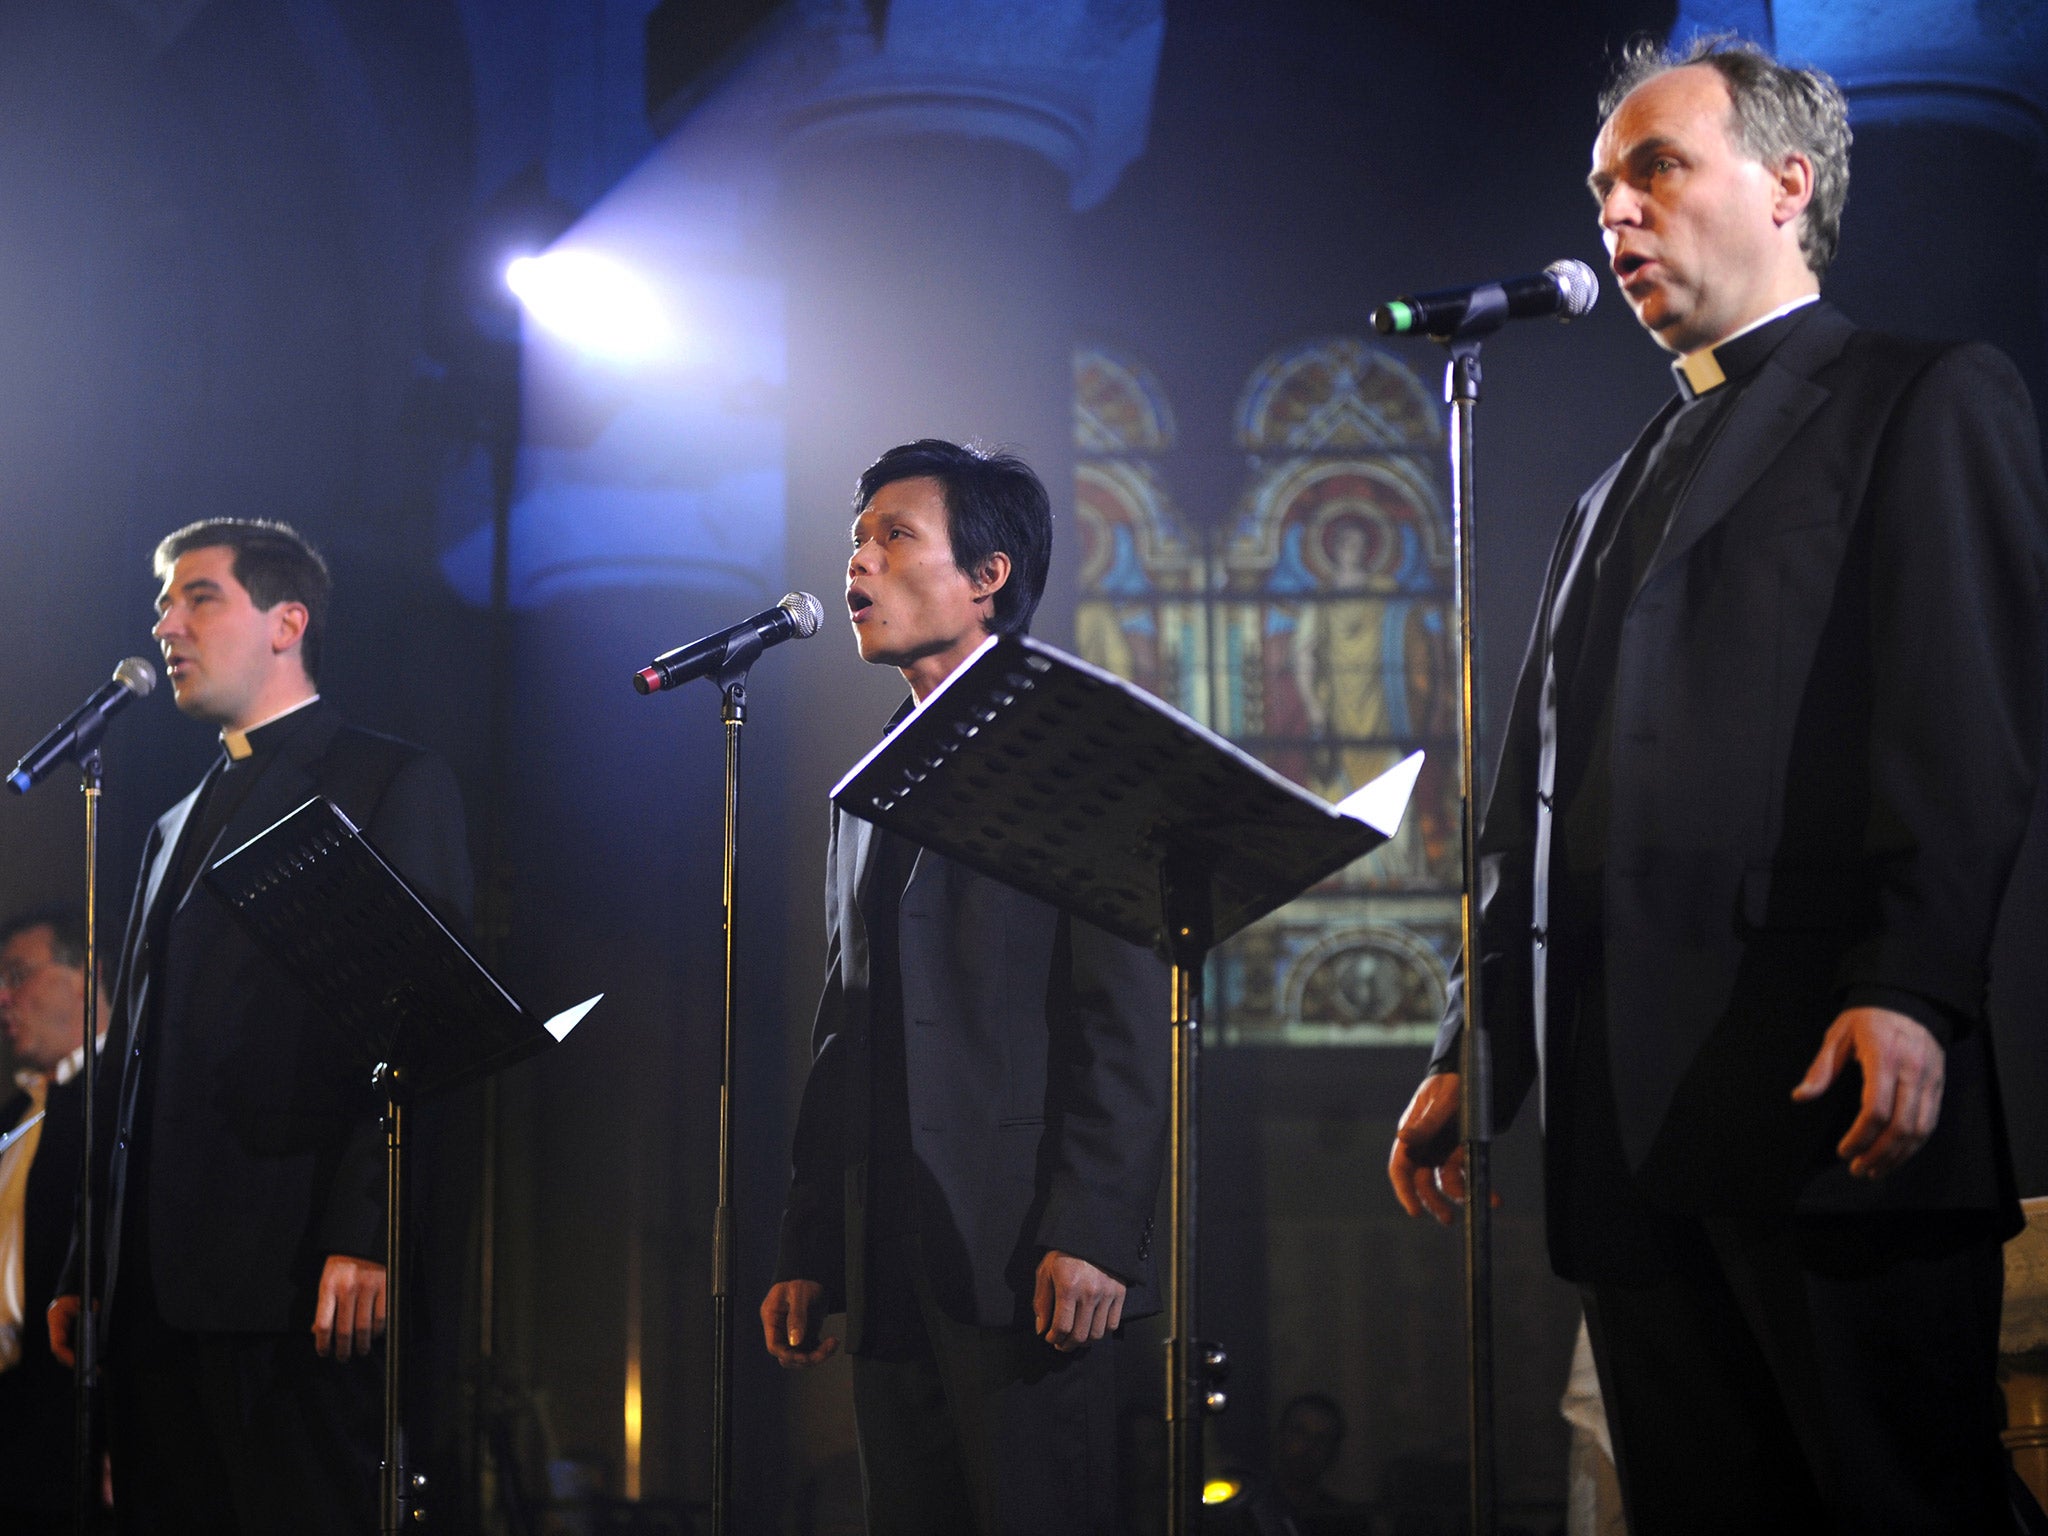 Les Prêtres, performing live